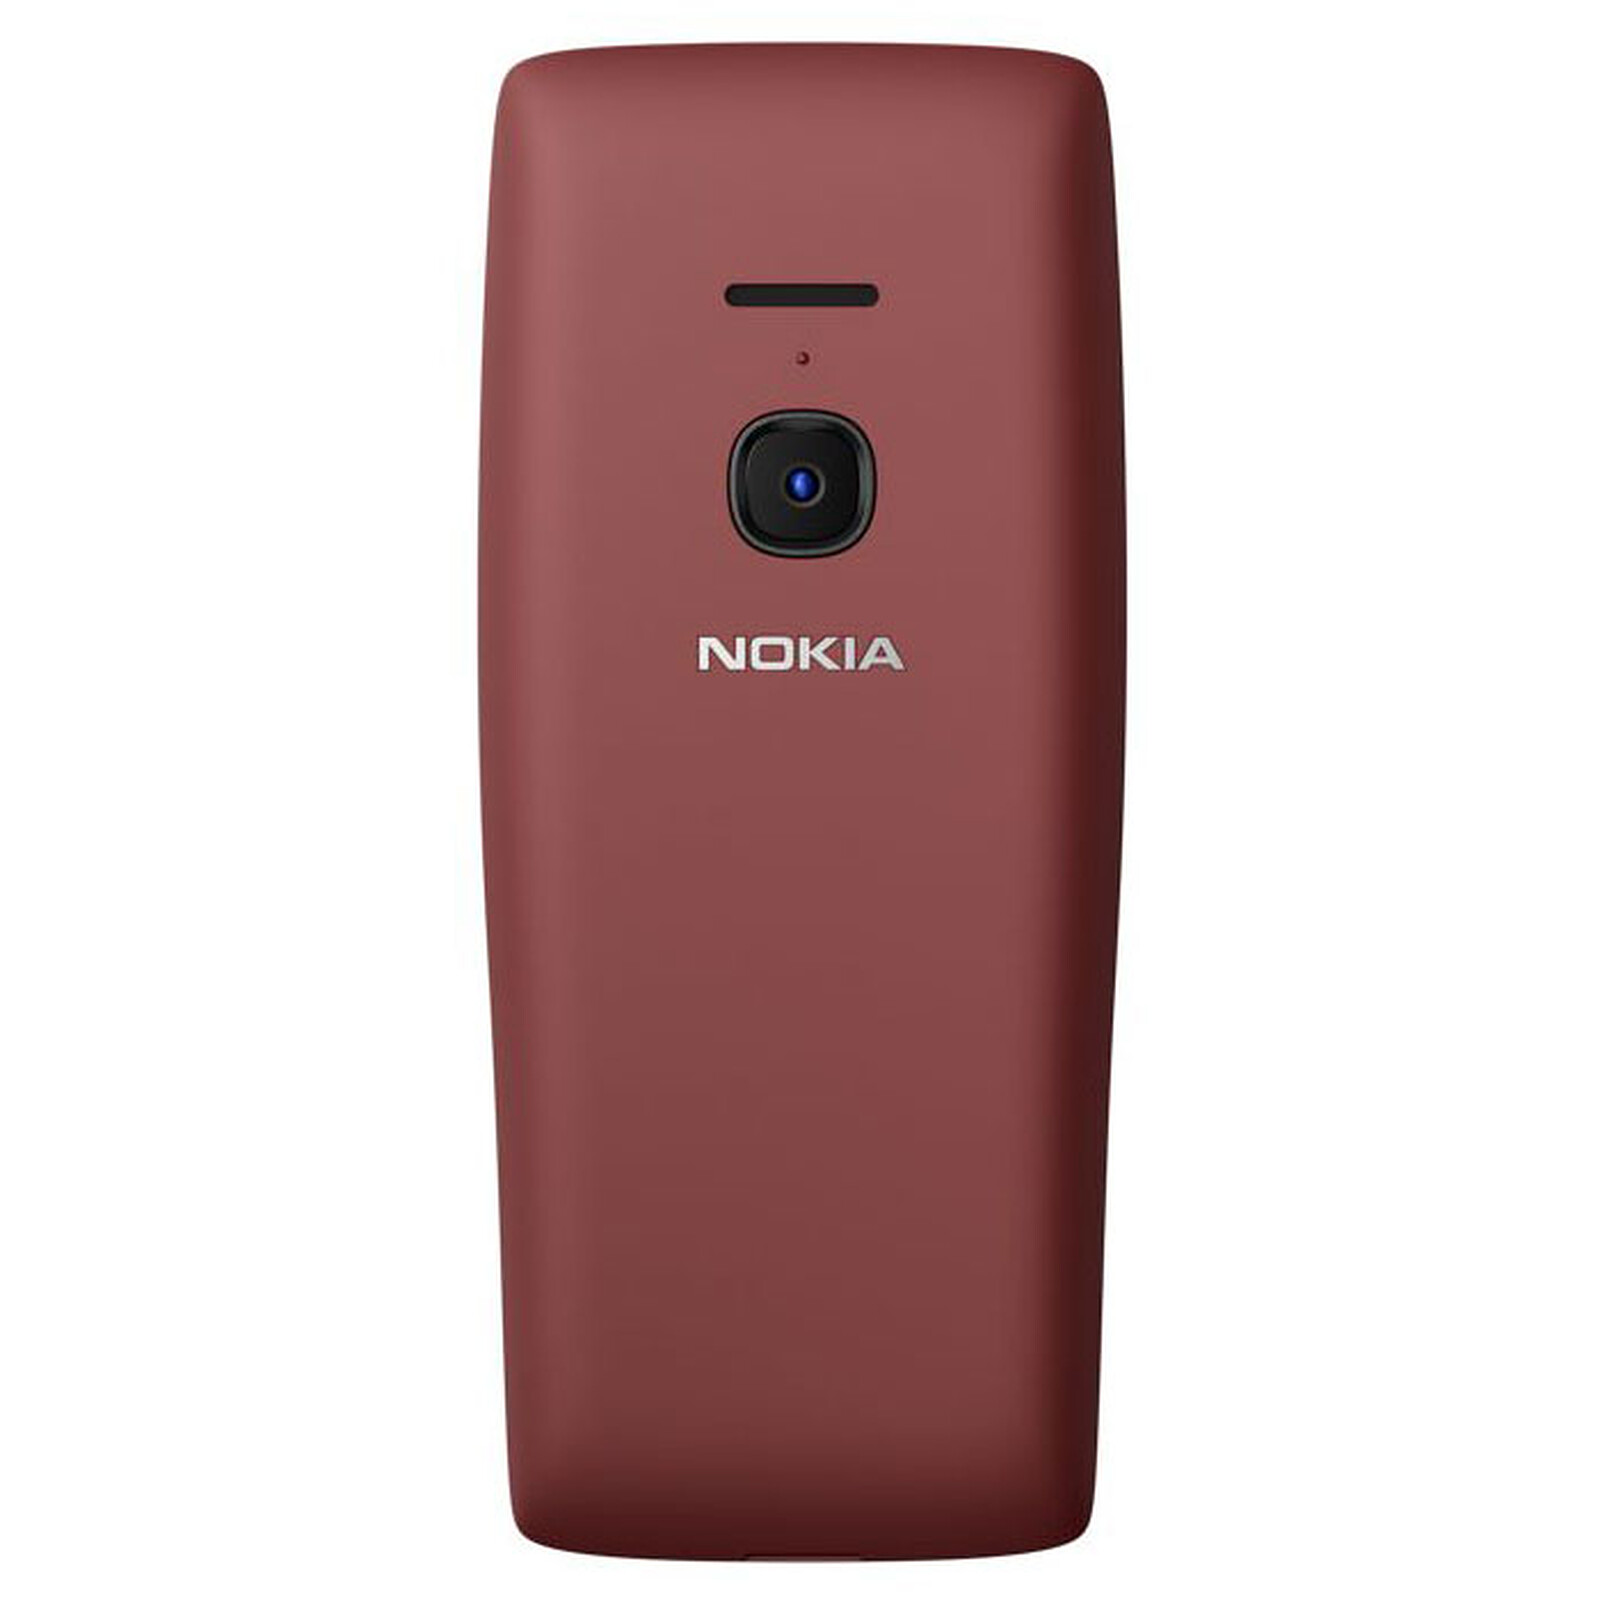 Nokia 8210 Red - Mobile phone & smartphone Nokia LDLC